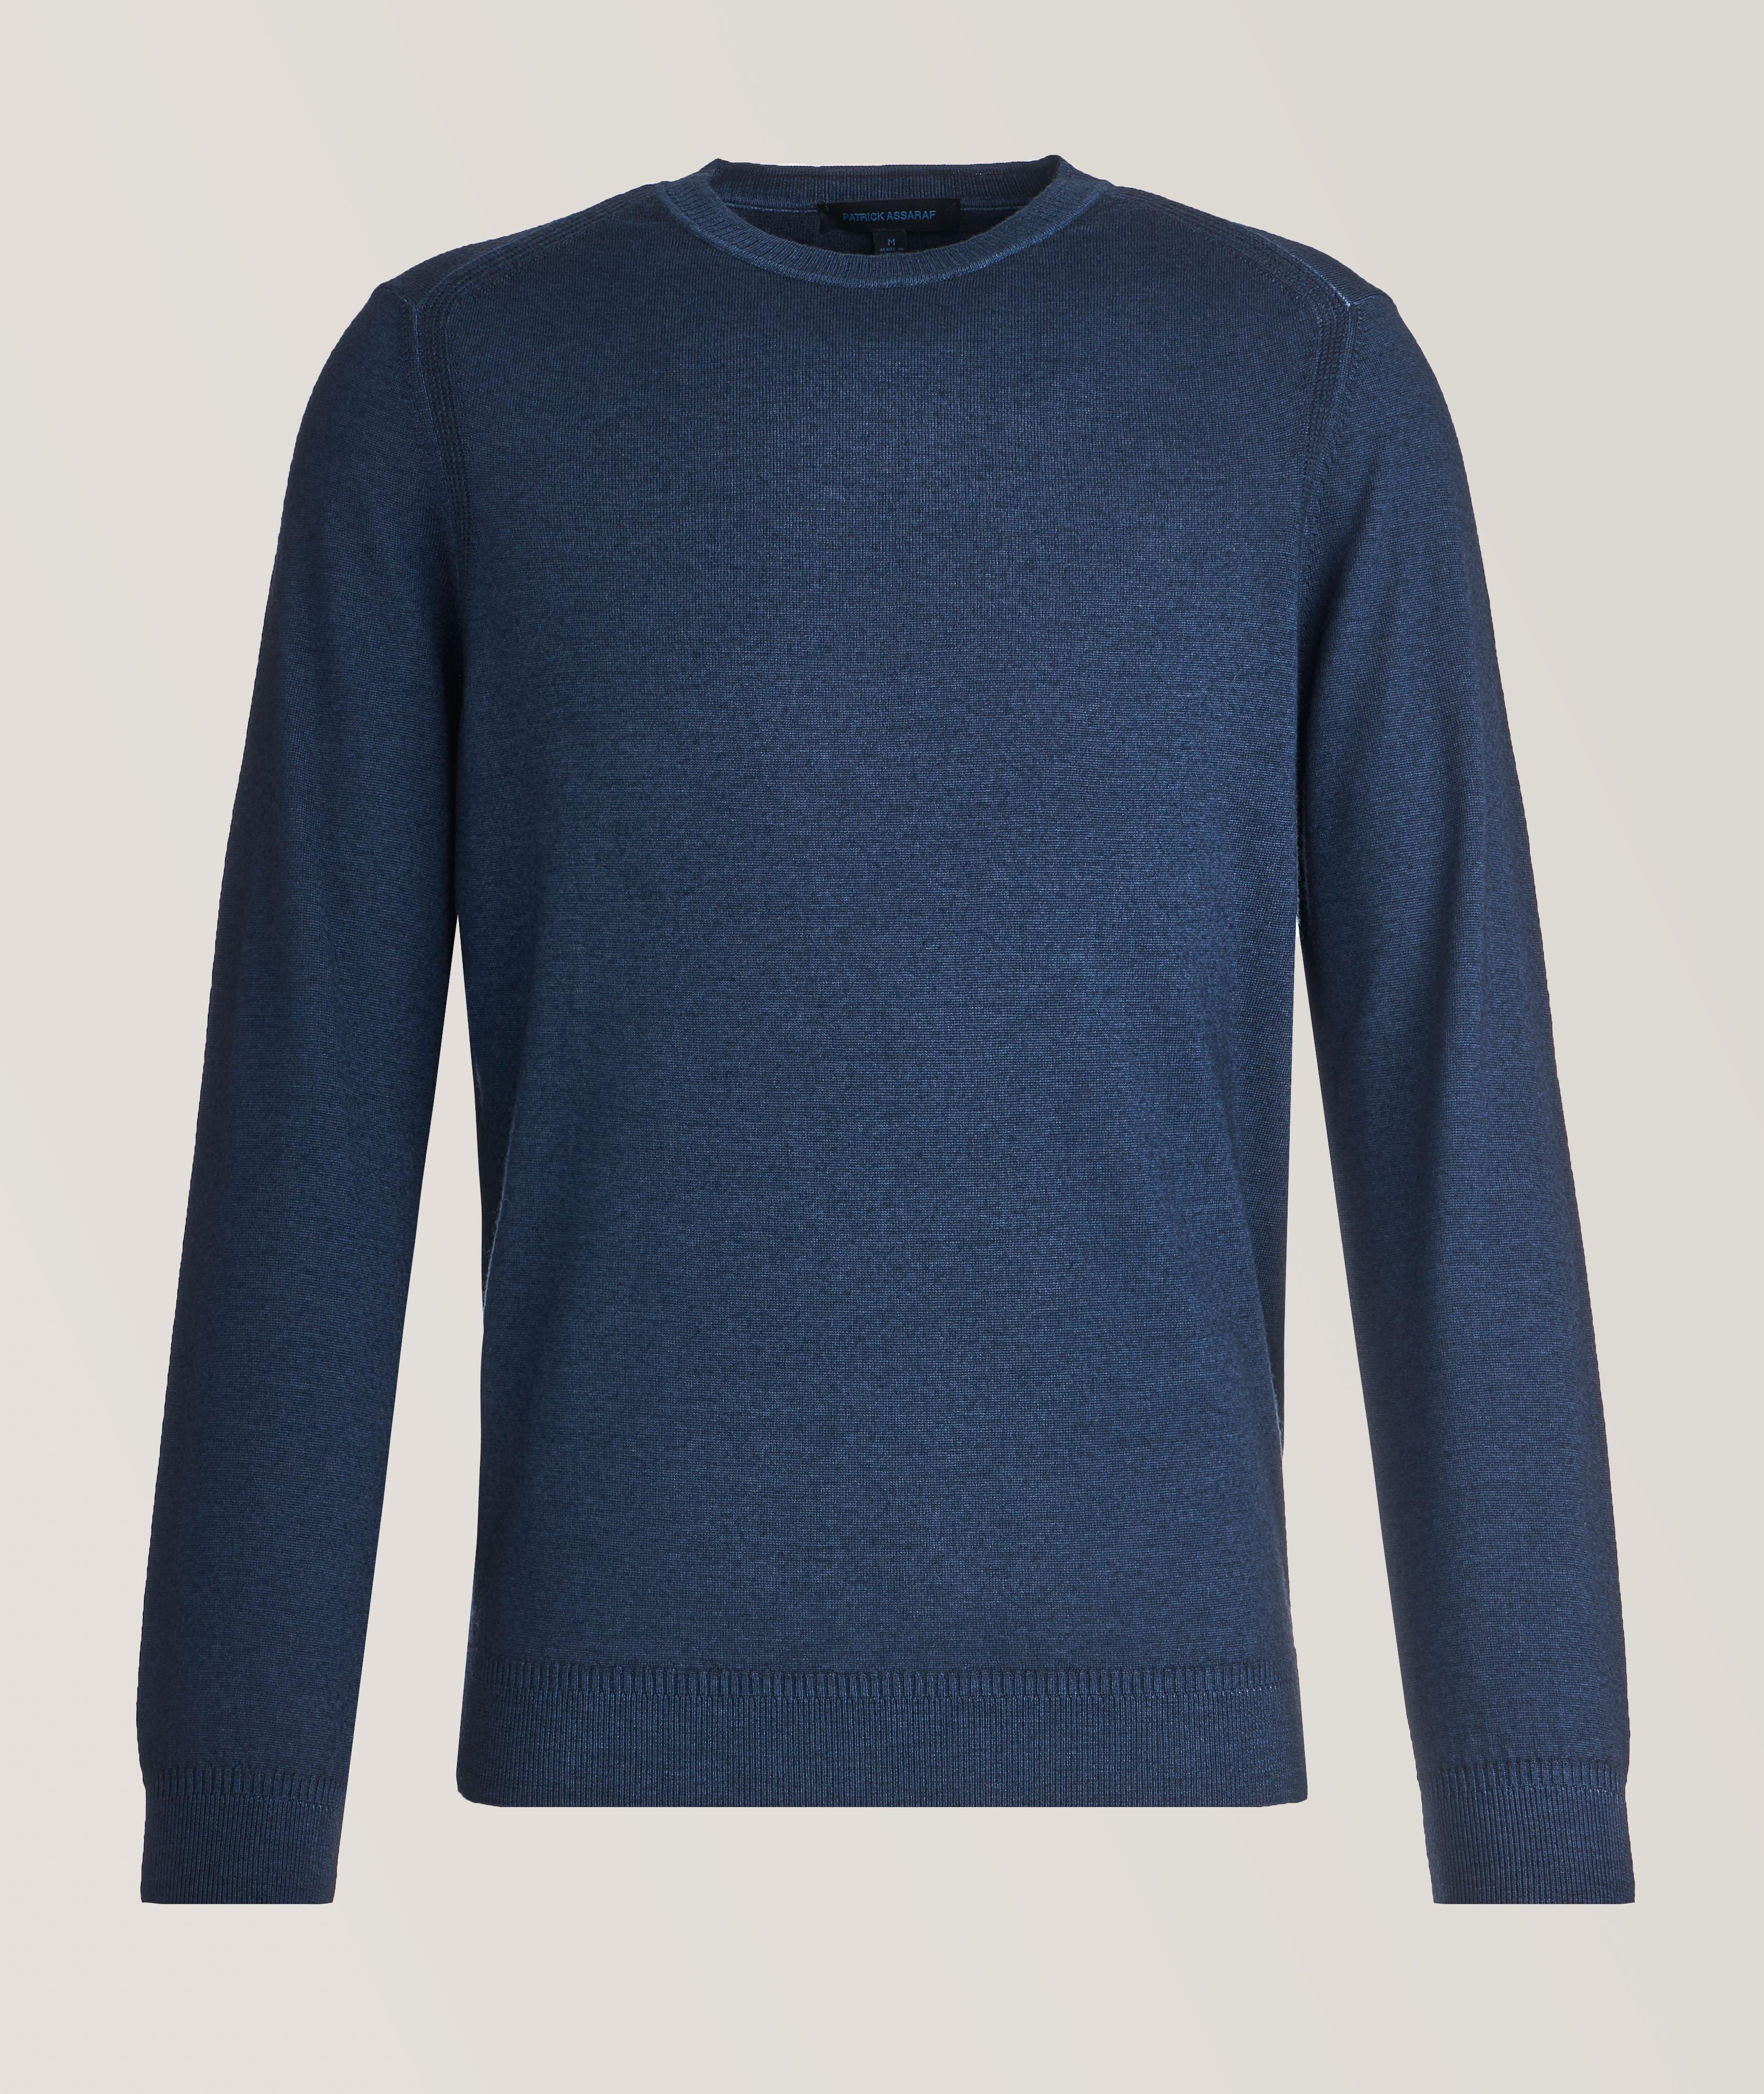 Merino Wool Crewneck Sweater image 0